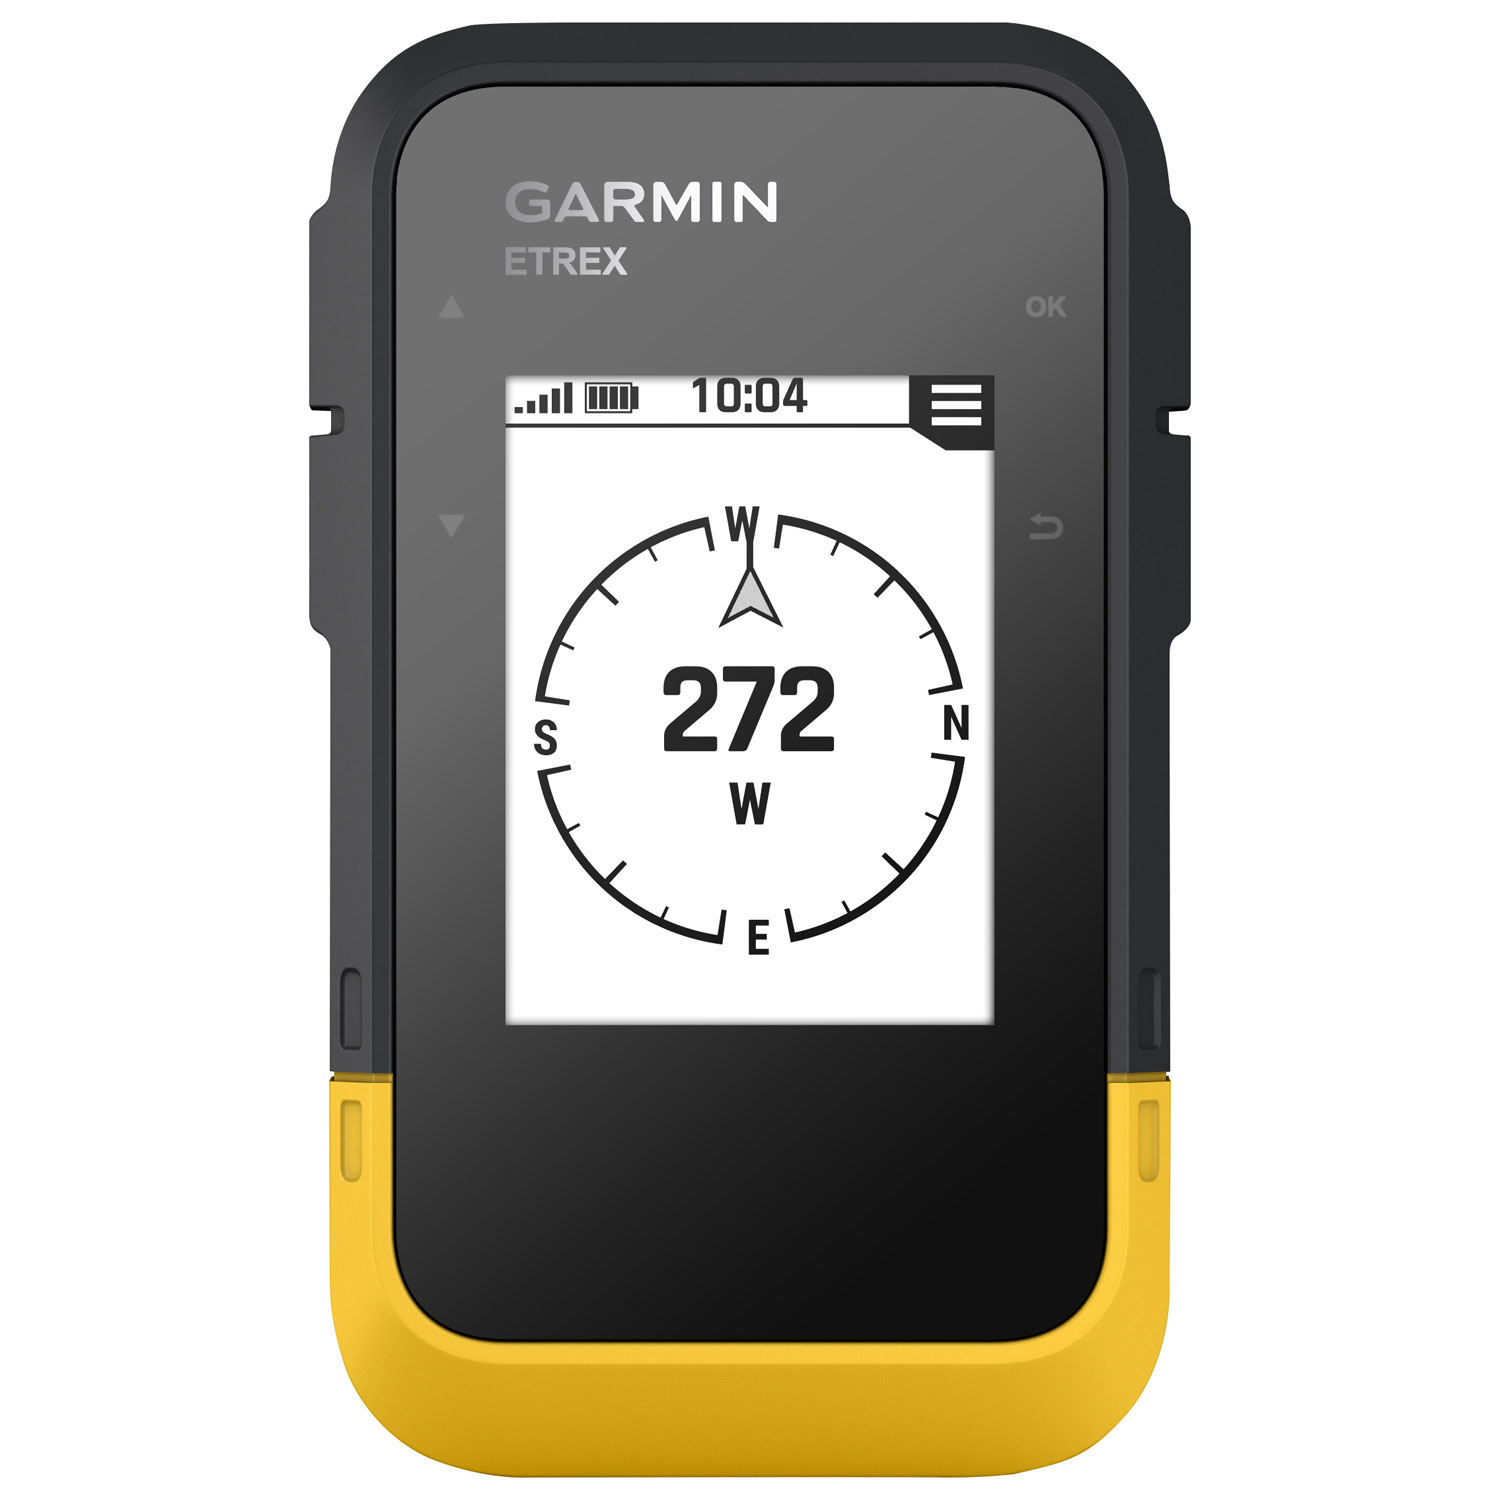 Garmin eTrex SE Handheld Outdoor GPS